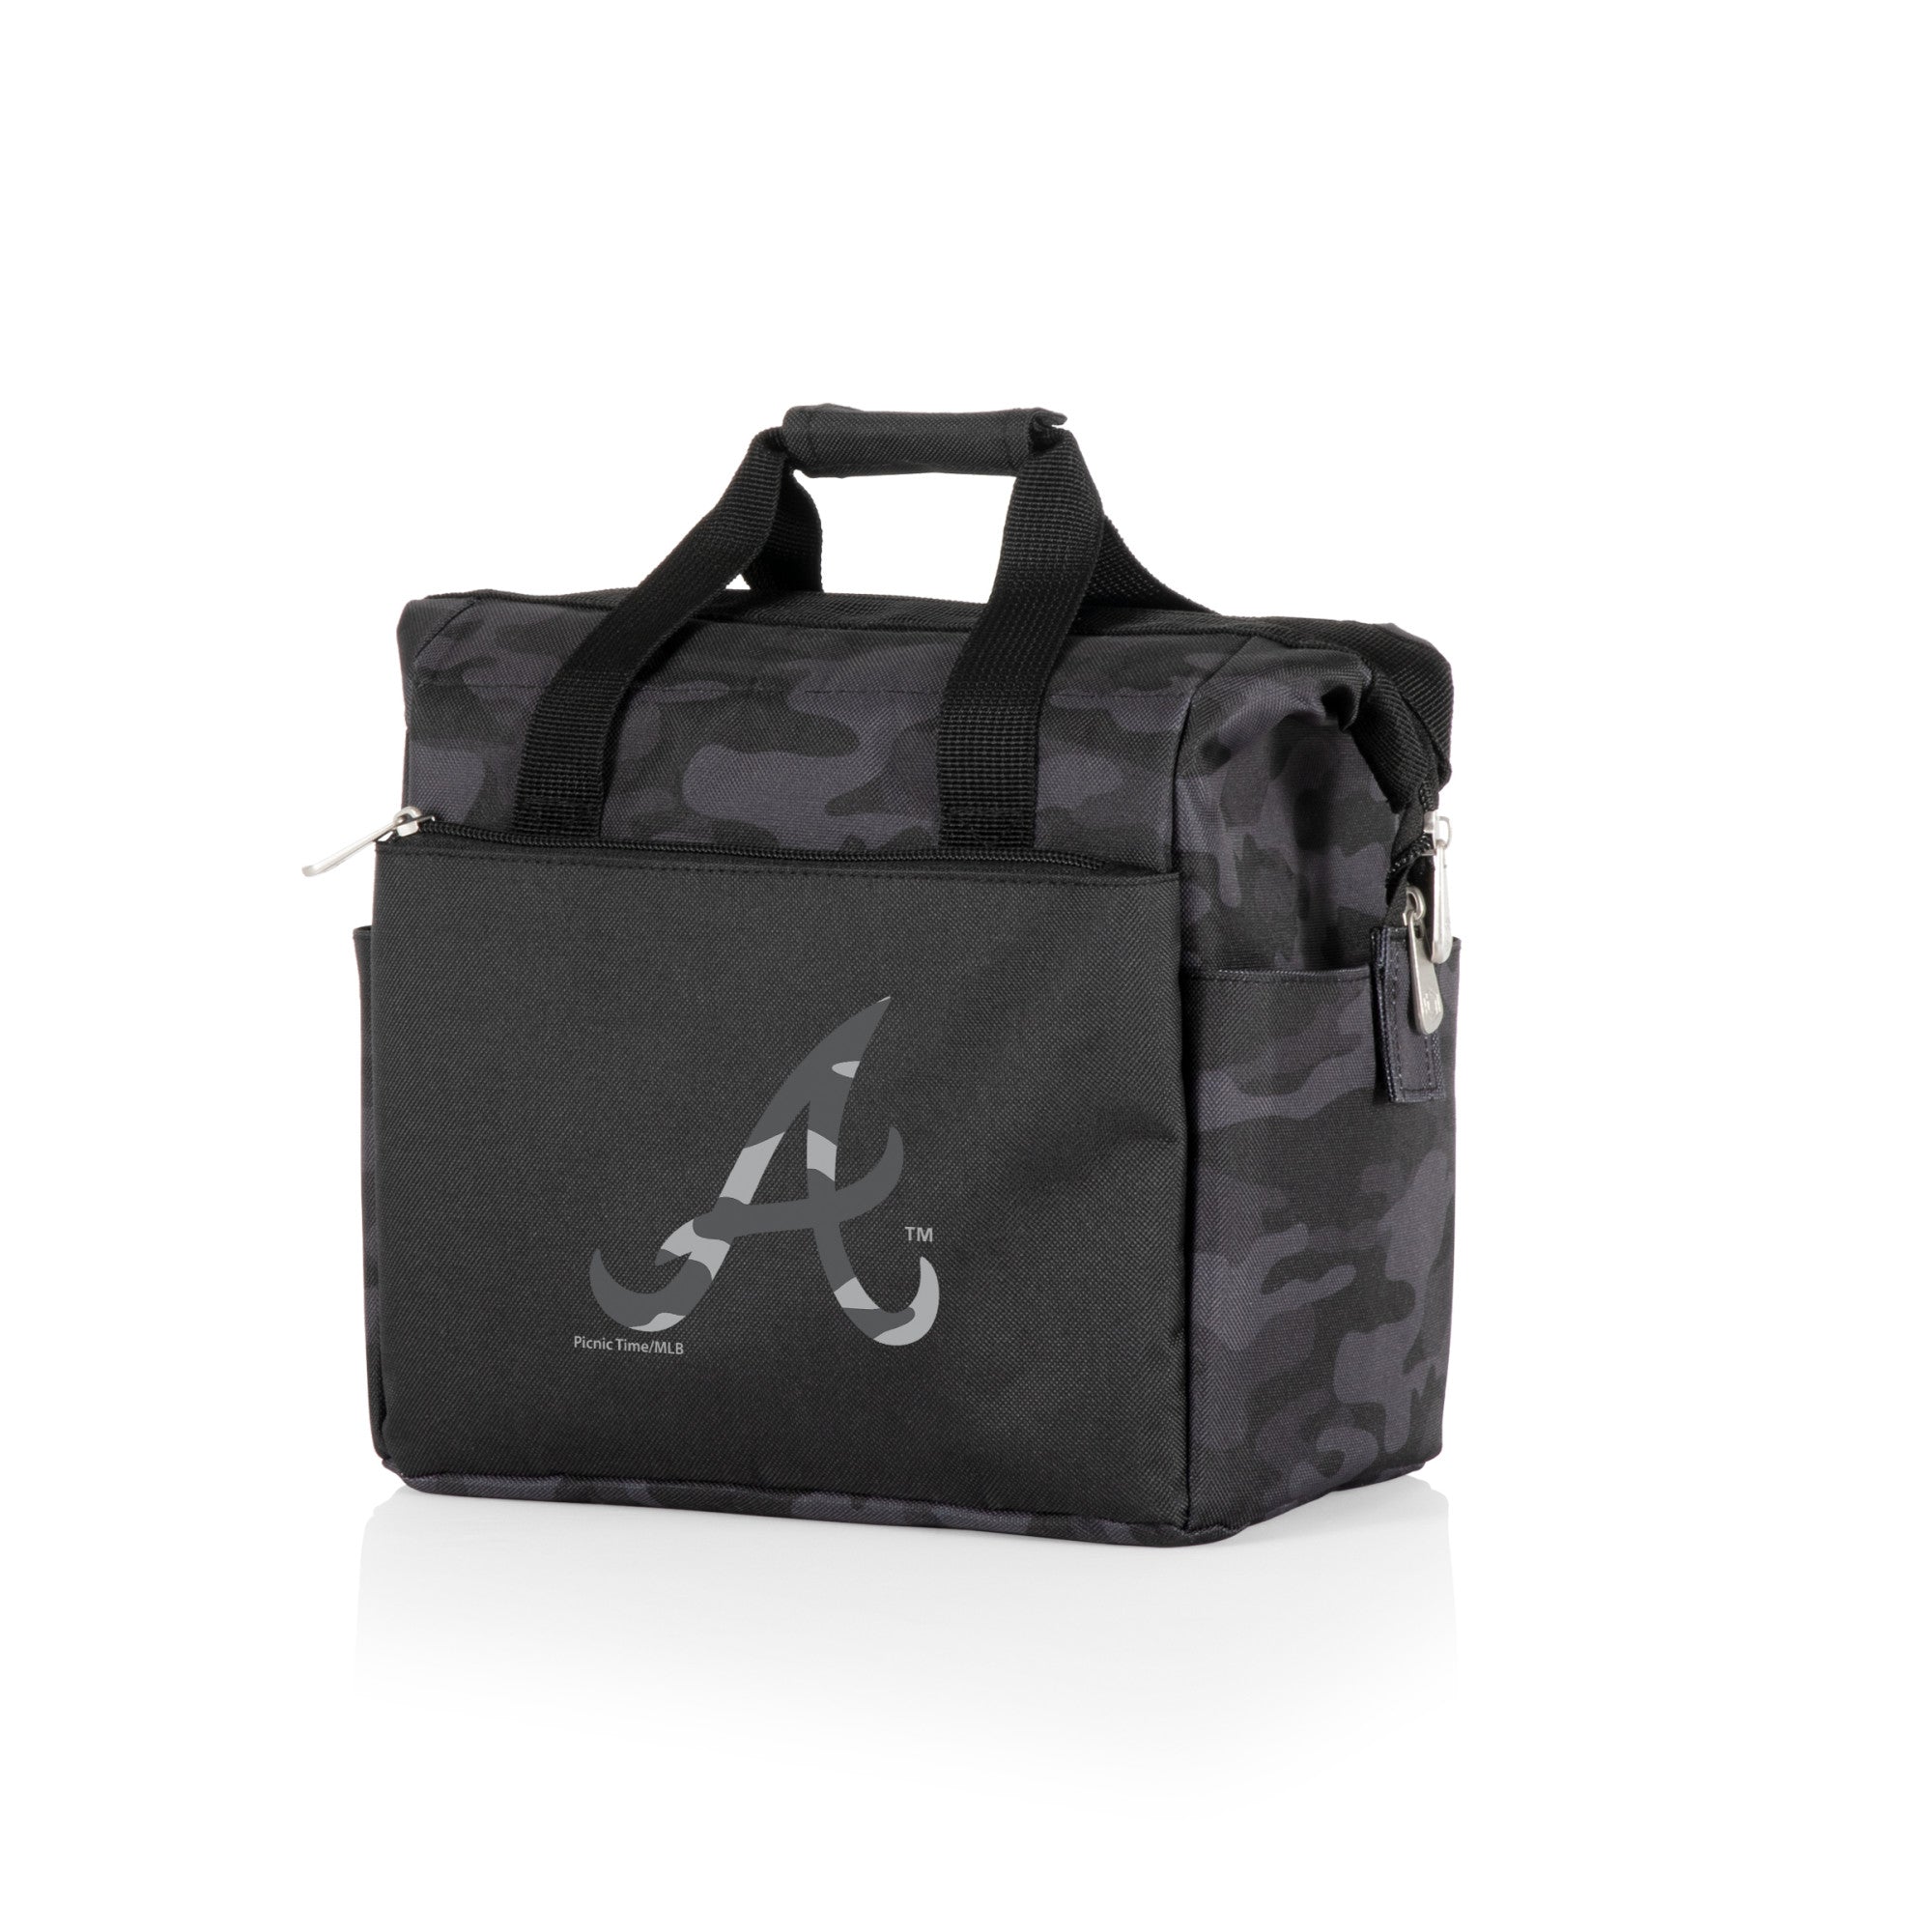 Atlanta Braves - On The Go Lunch Bag Cooler